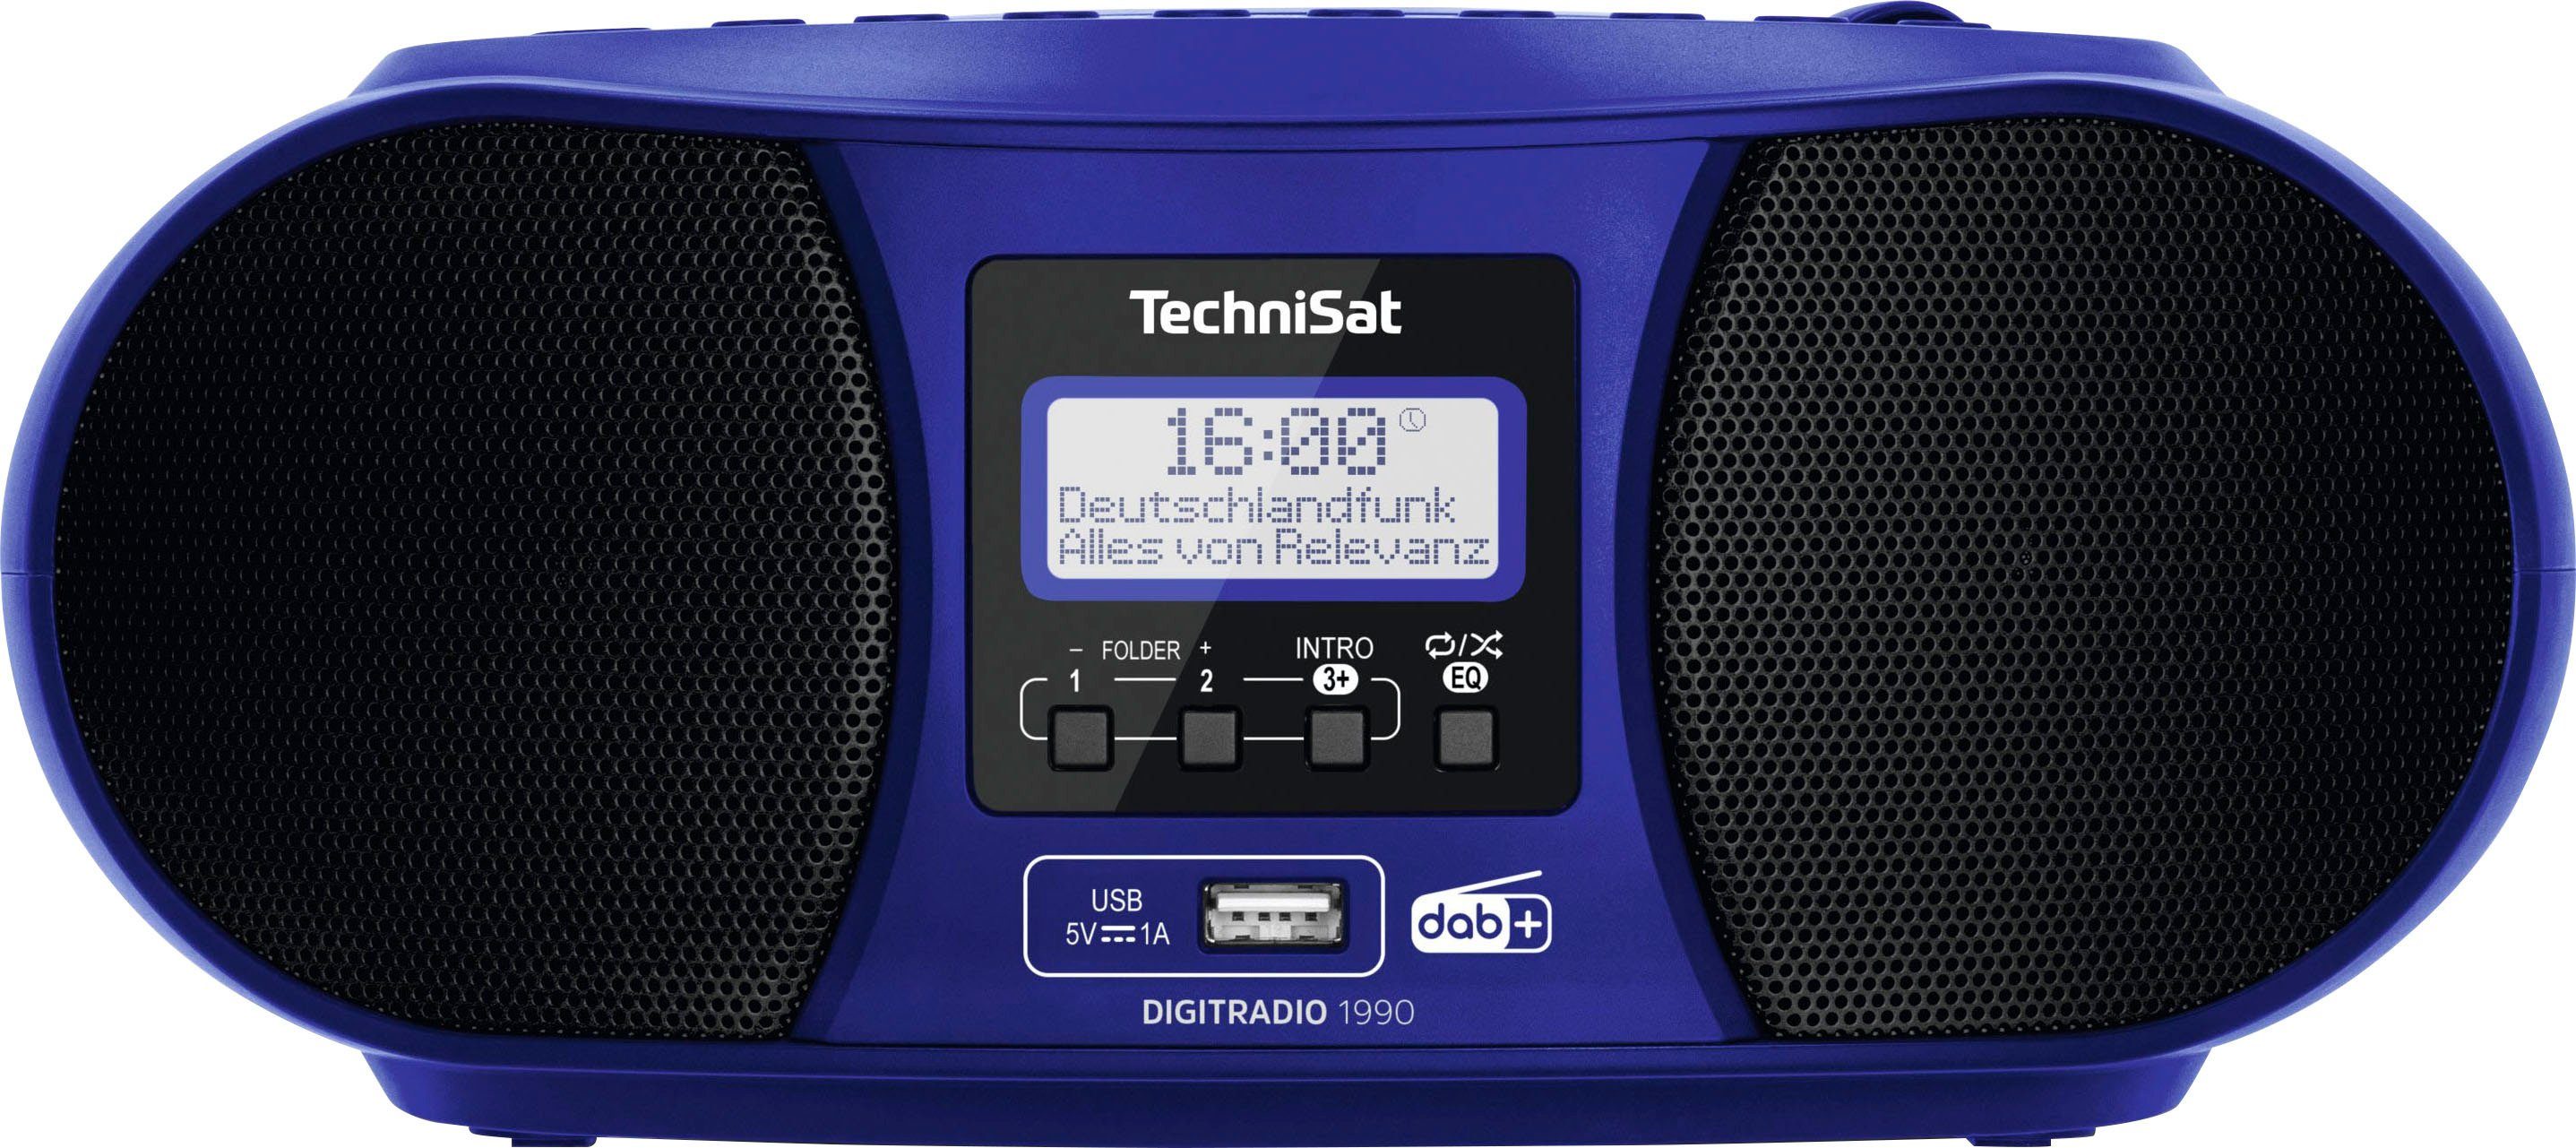 RDS, (Digitalradio TechniSat (DAB), DIGITRADIO CD-Player) UKW (DAB) mit 1990 Digitalradio 3 blau W,